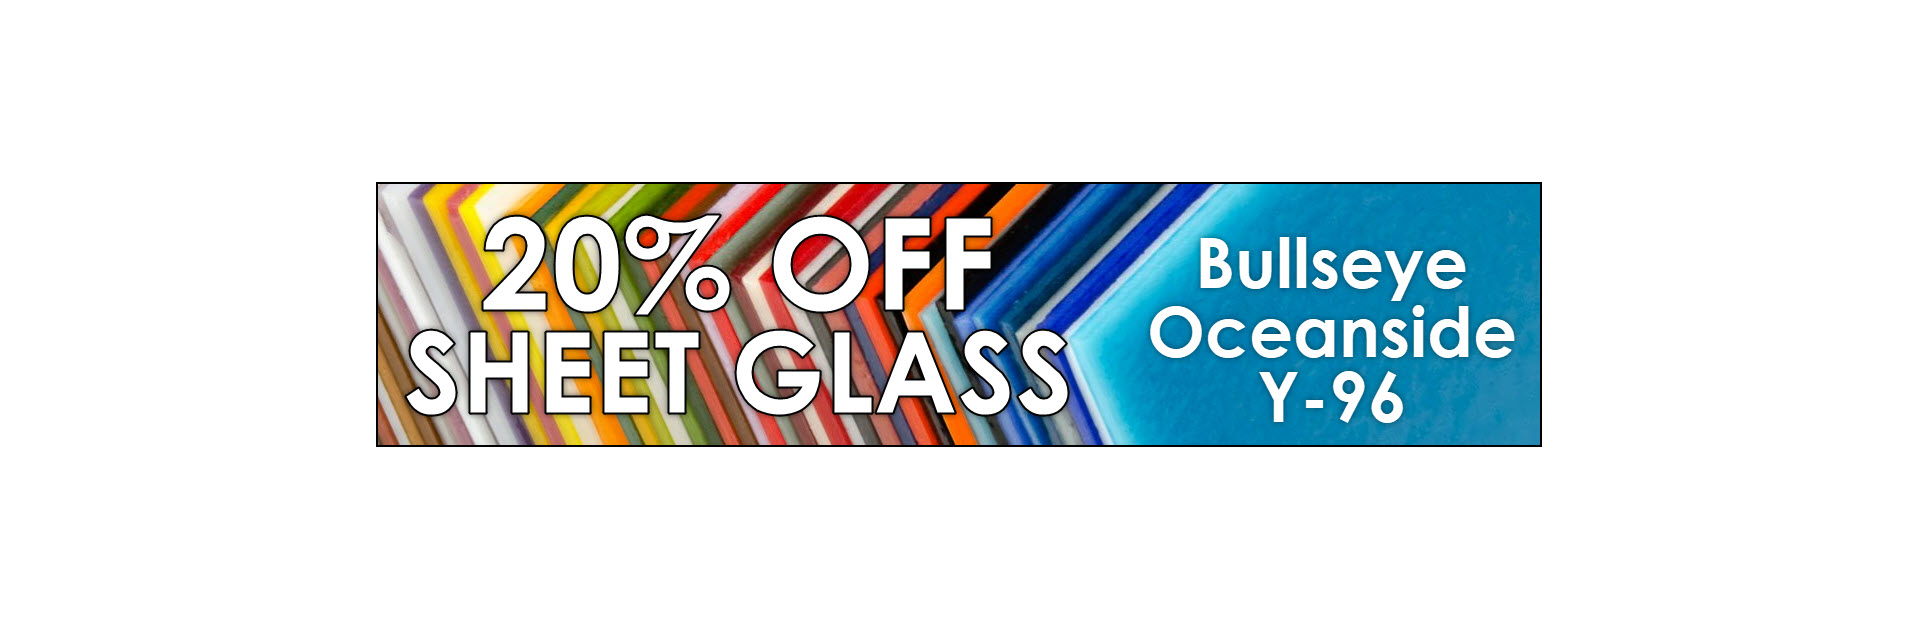 Sheet Glass Sale